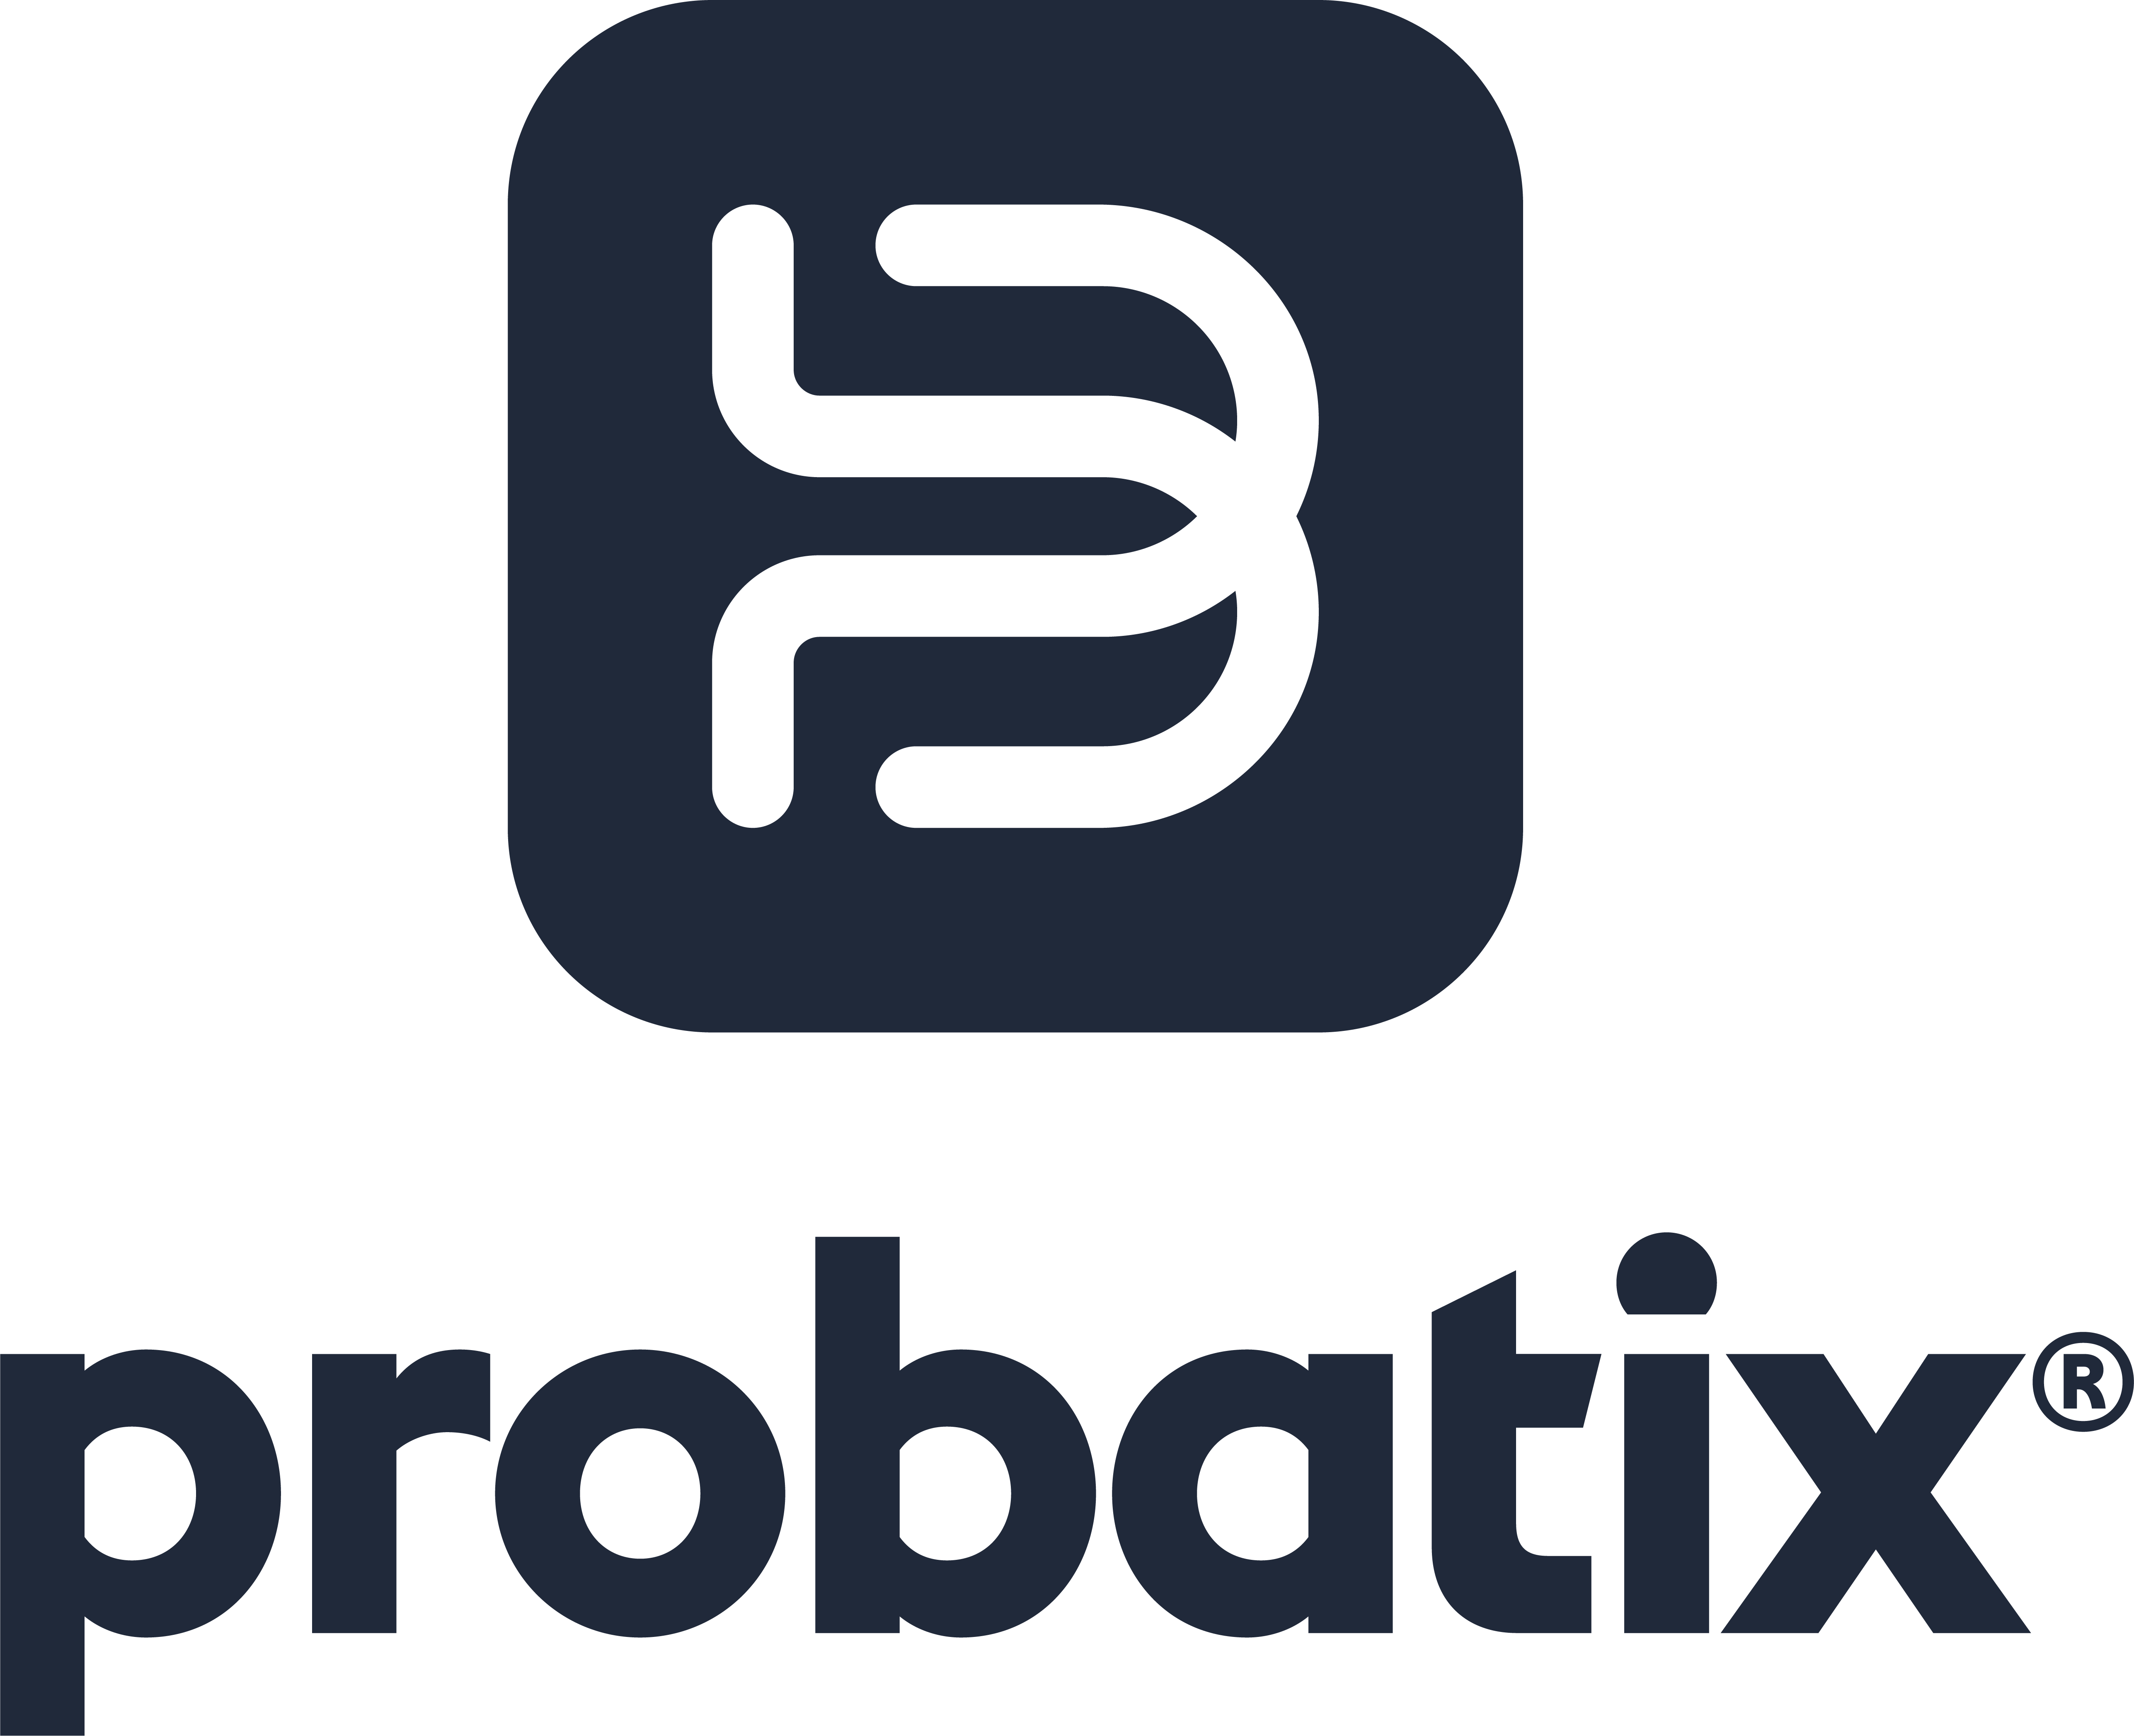 Probatix